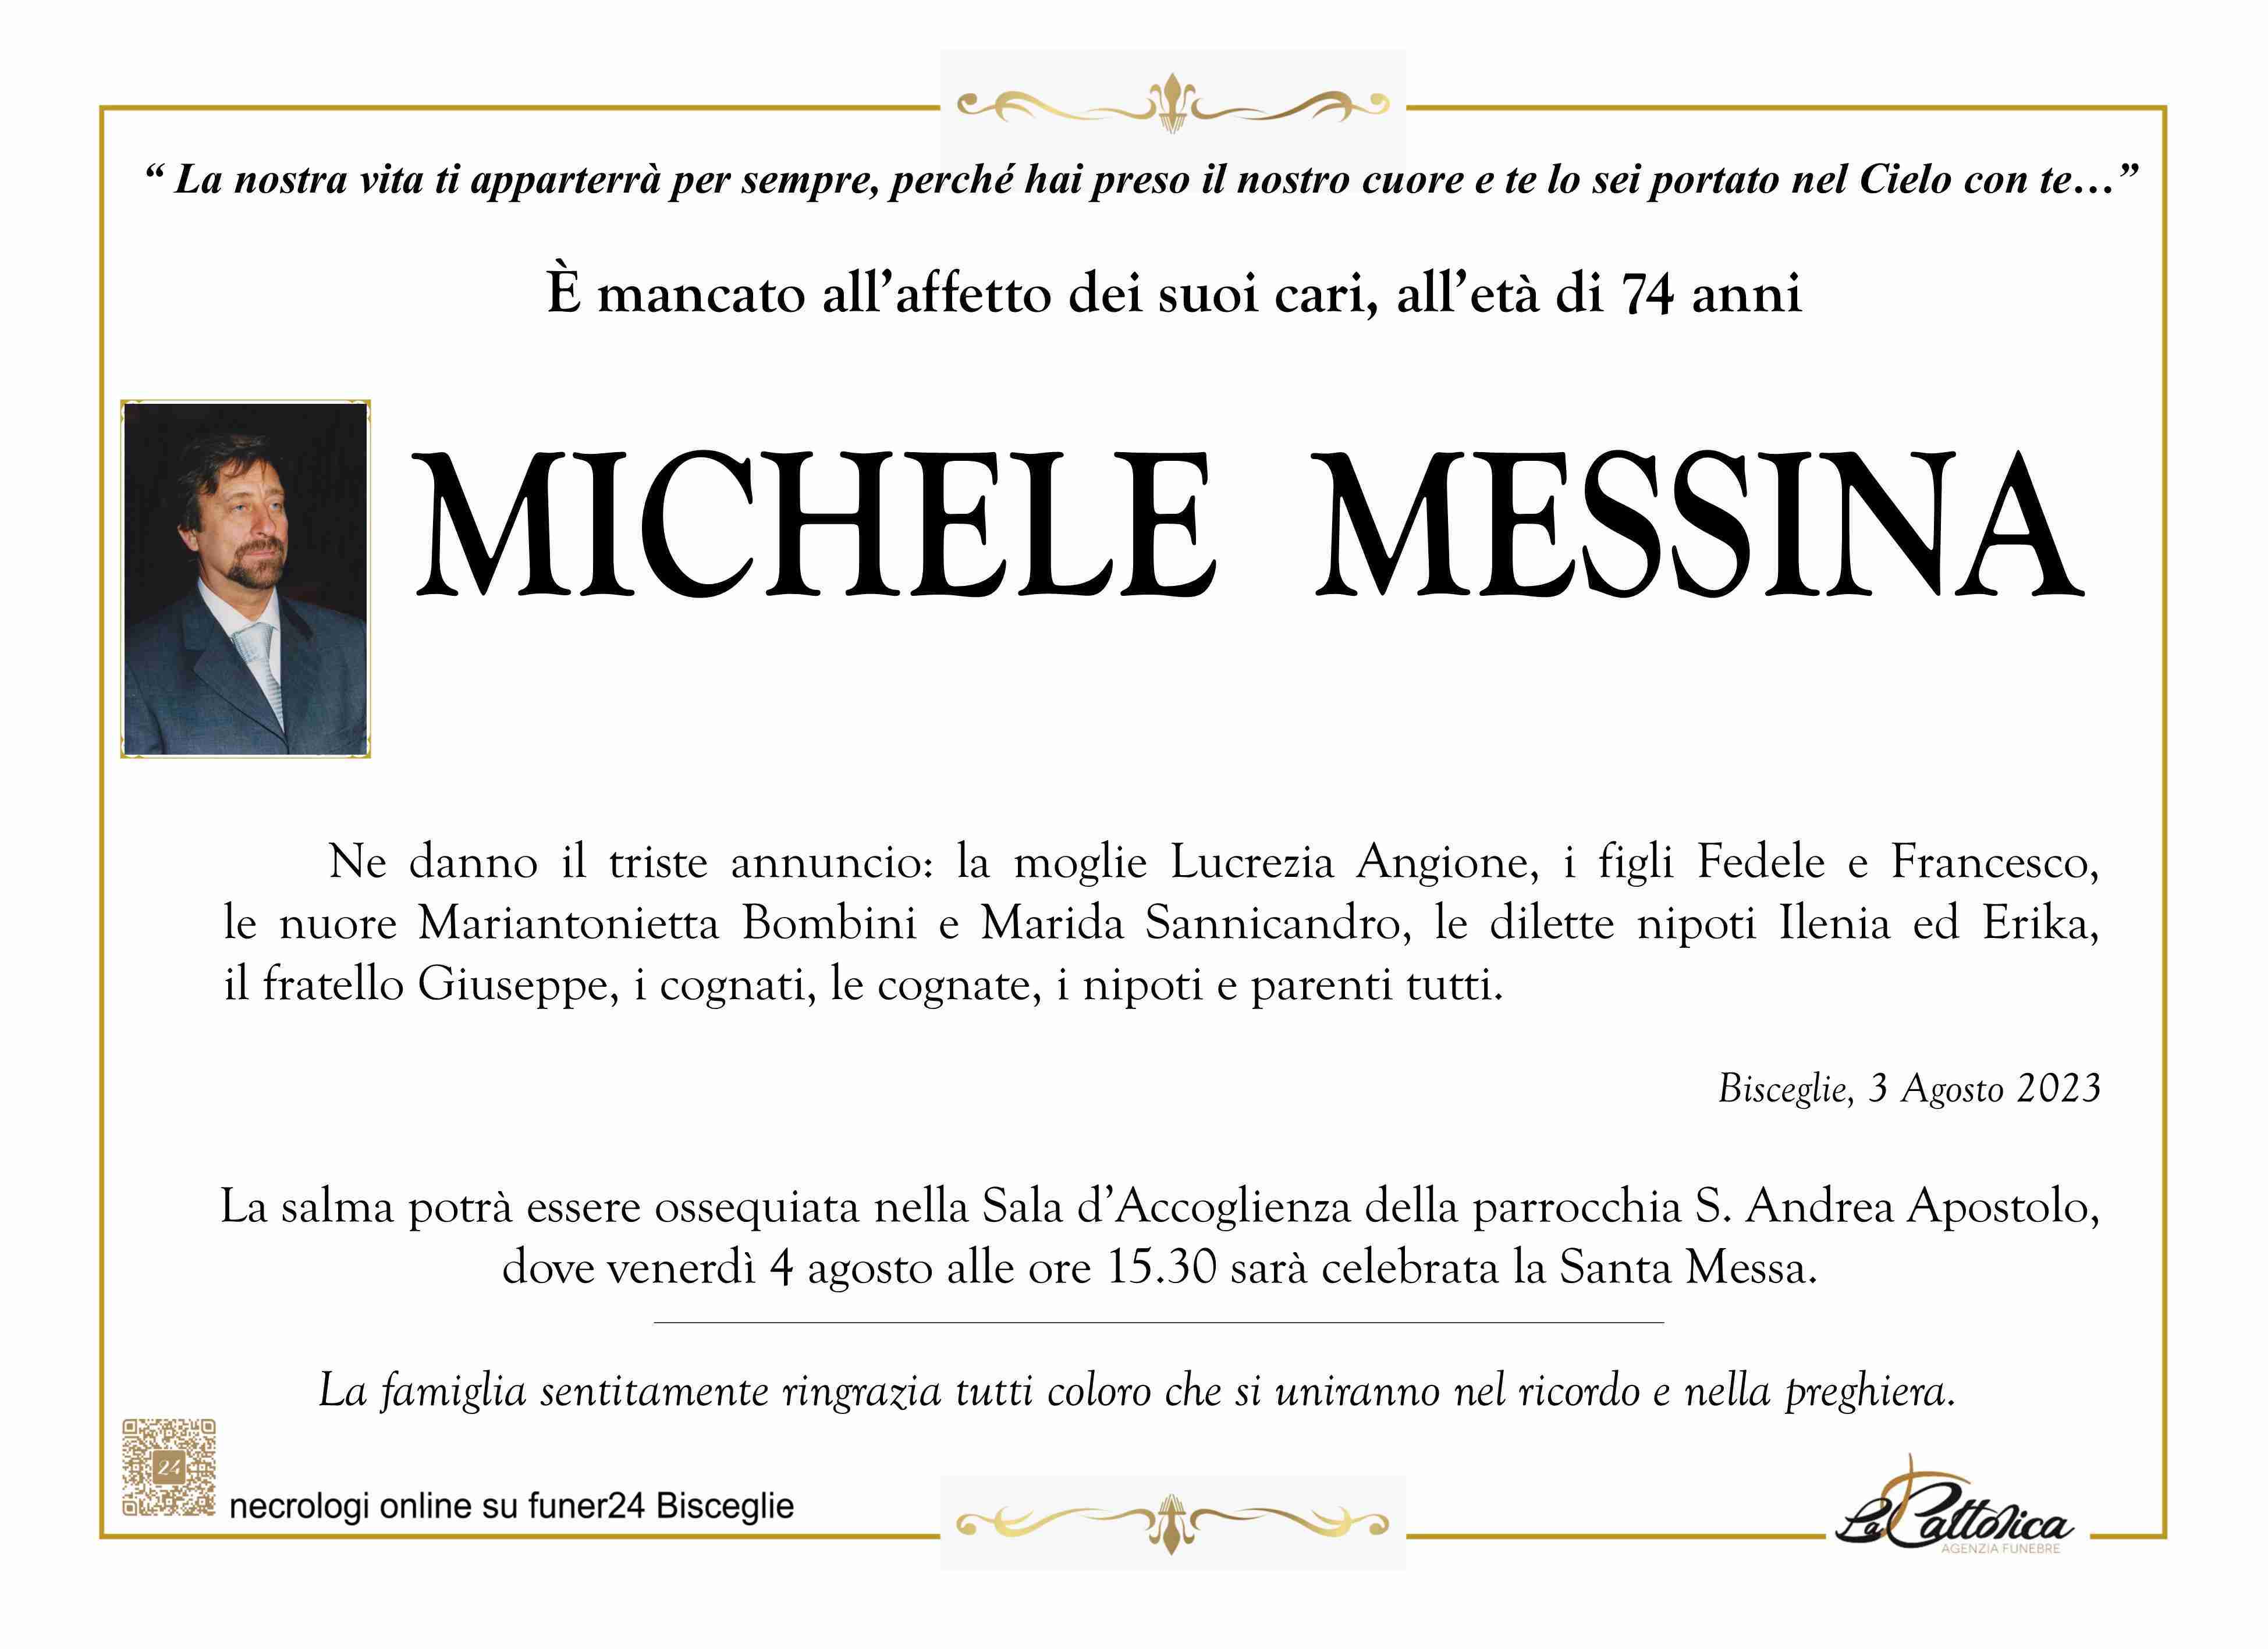 Michele Messina